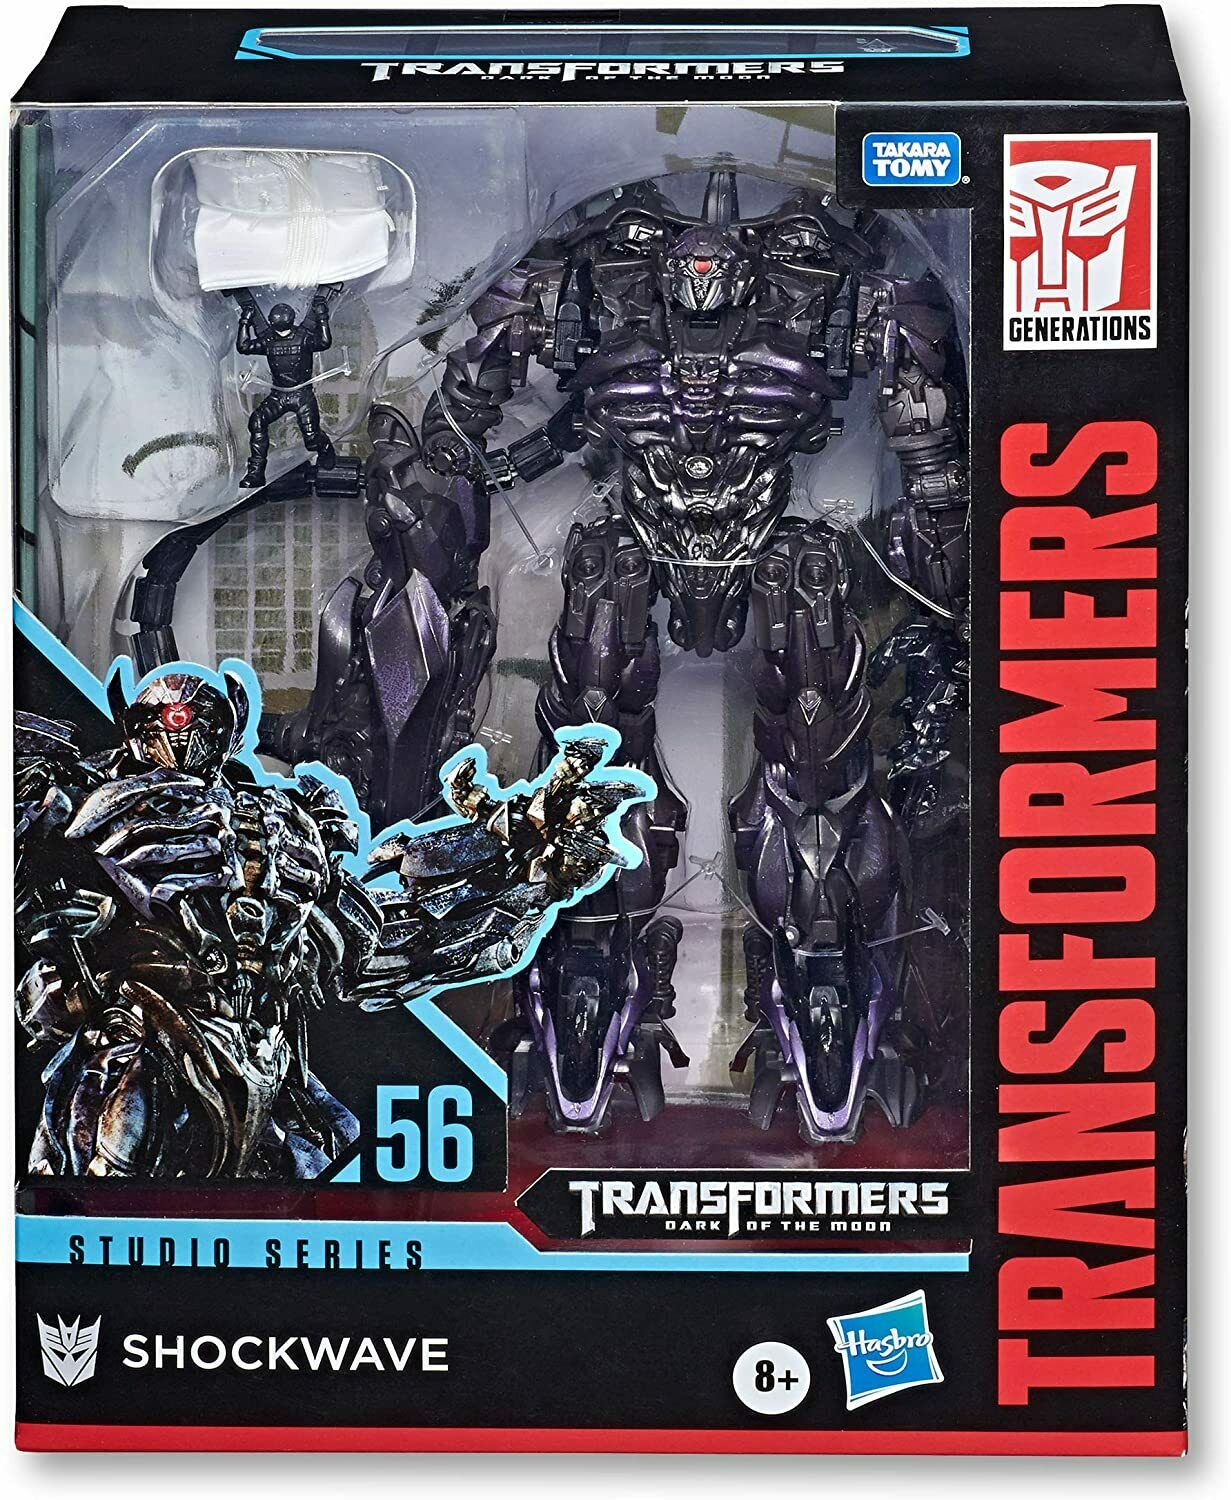 studio series transformers toys